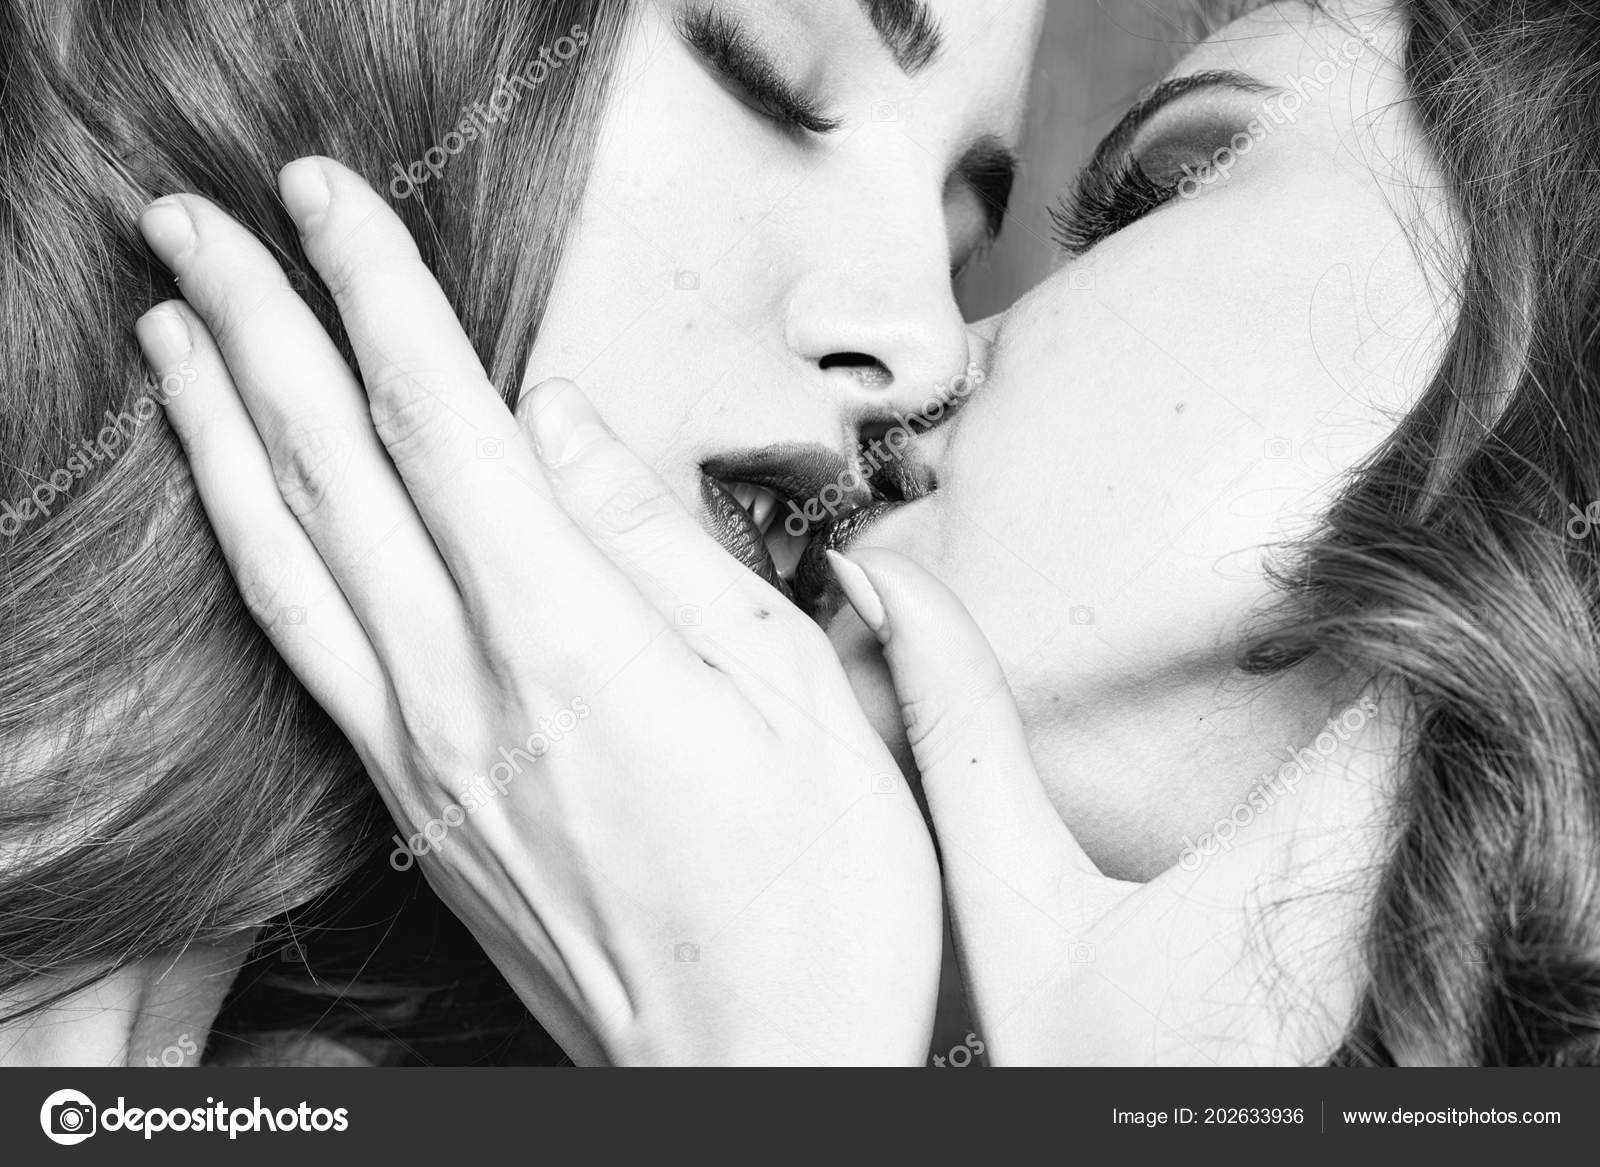 Lipstick lesbian girls kissing